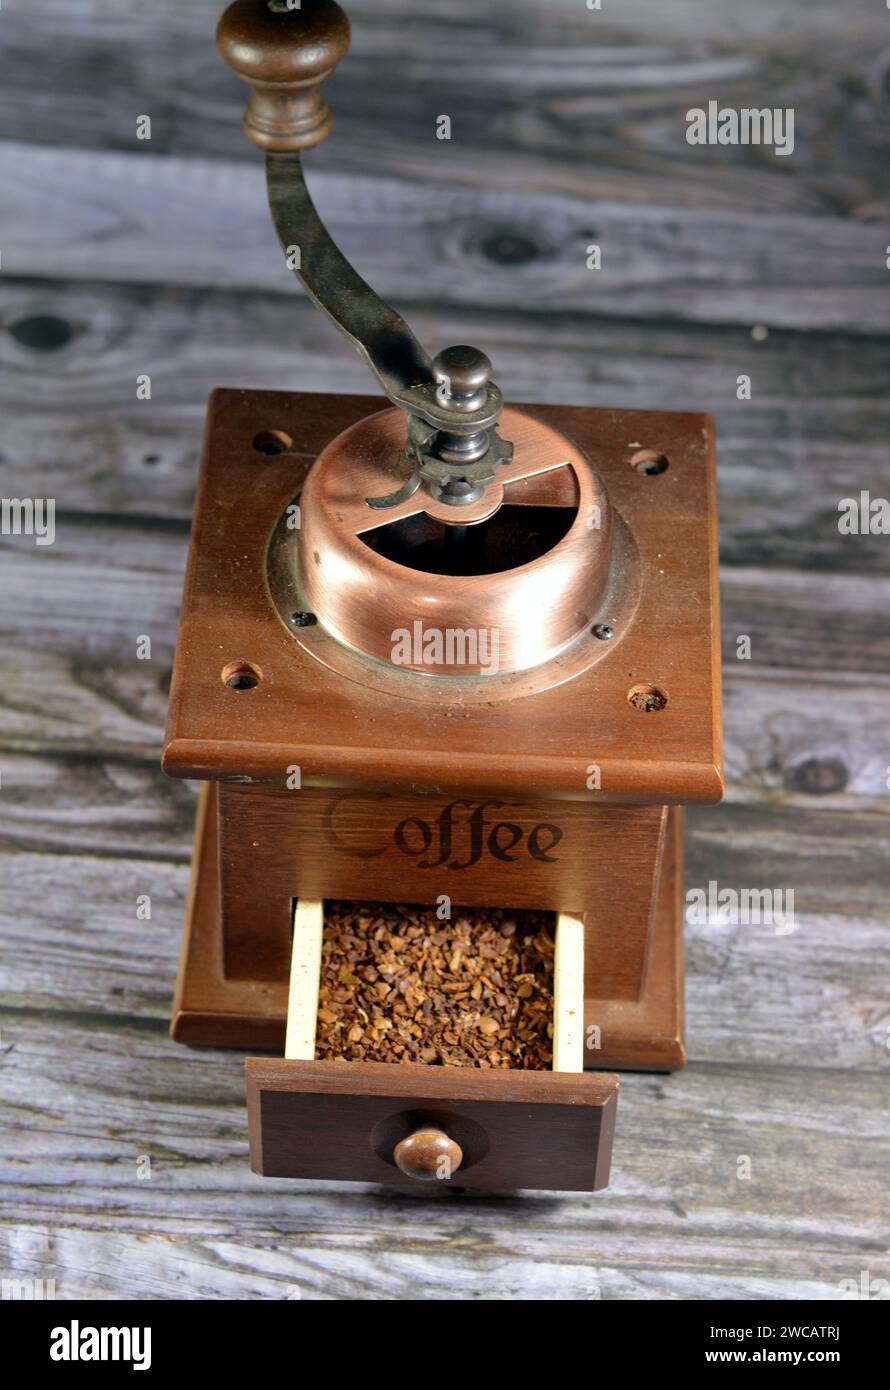 Molinillo de cafe antiguo moledor de cafe manual molino de grano de cafe  clasico